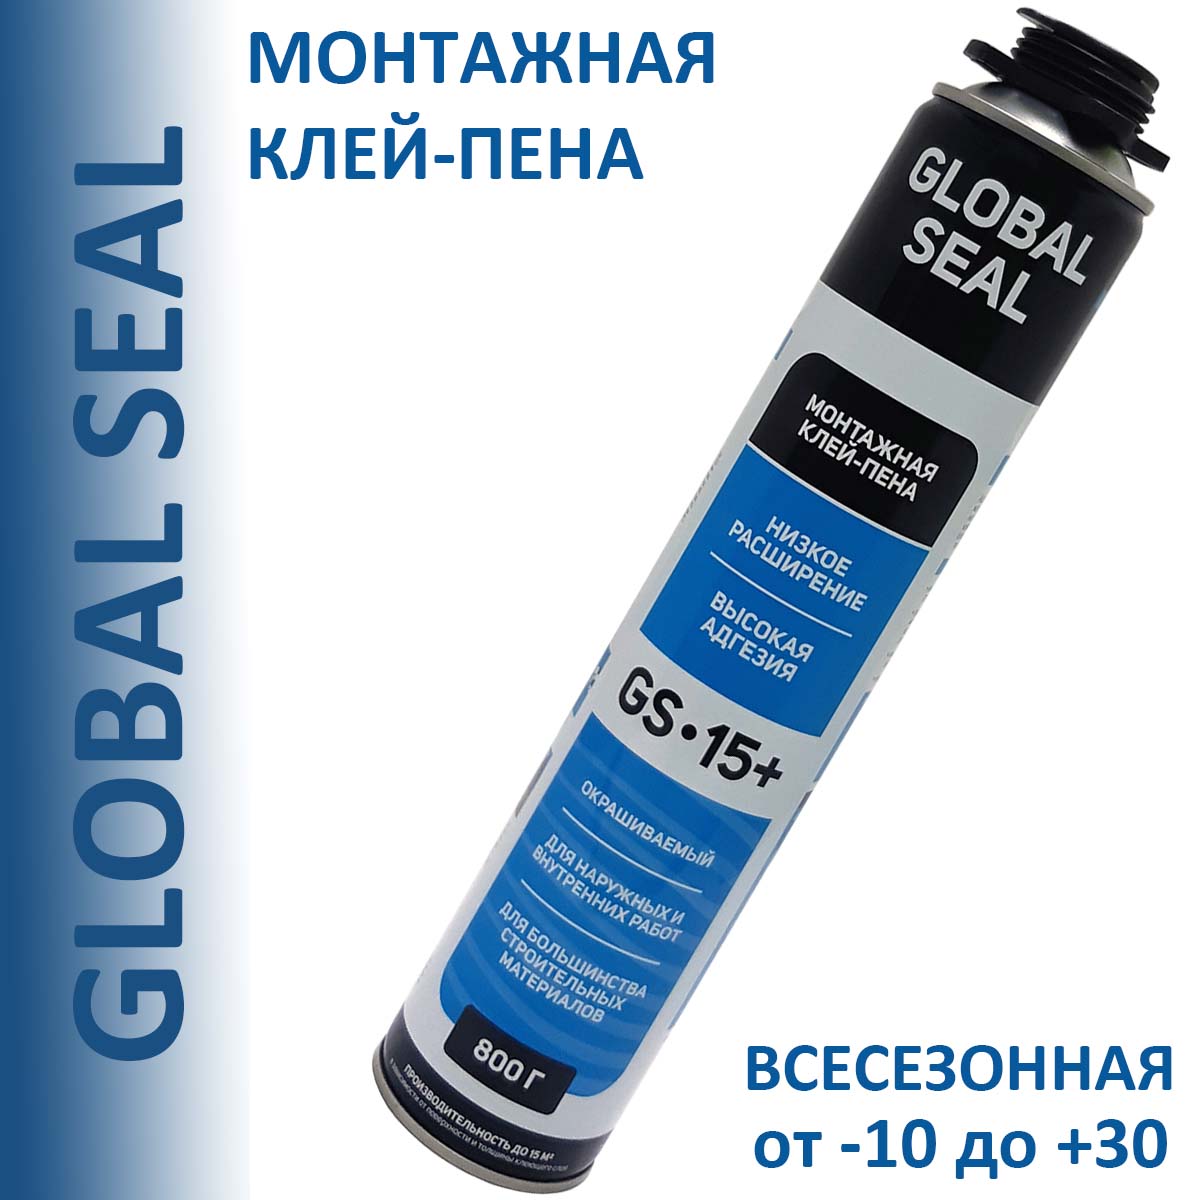 Клей-пена Монтажная Global Seal GS-15, всесезонная, 800 гр. монтажная клей пена premium